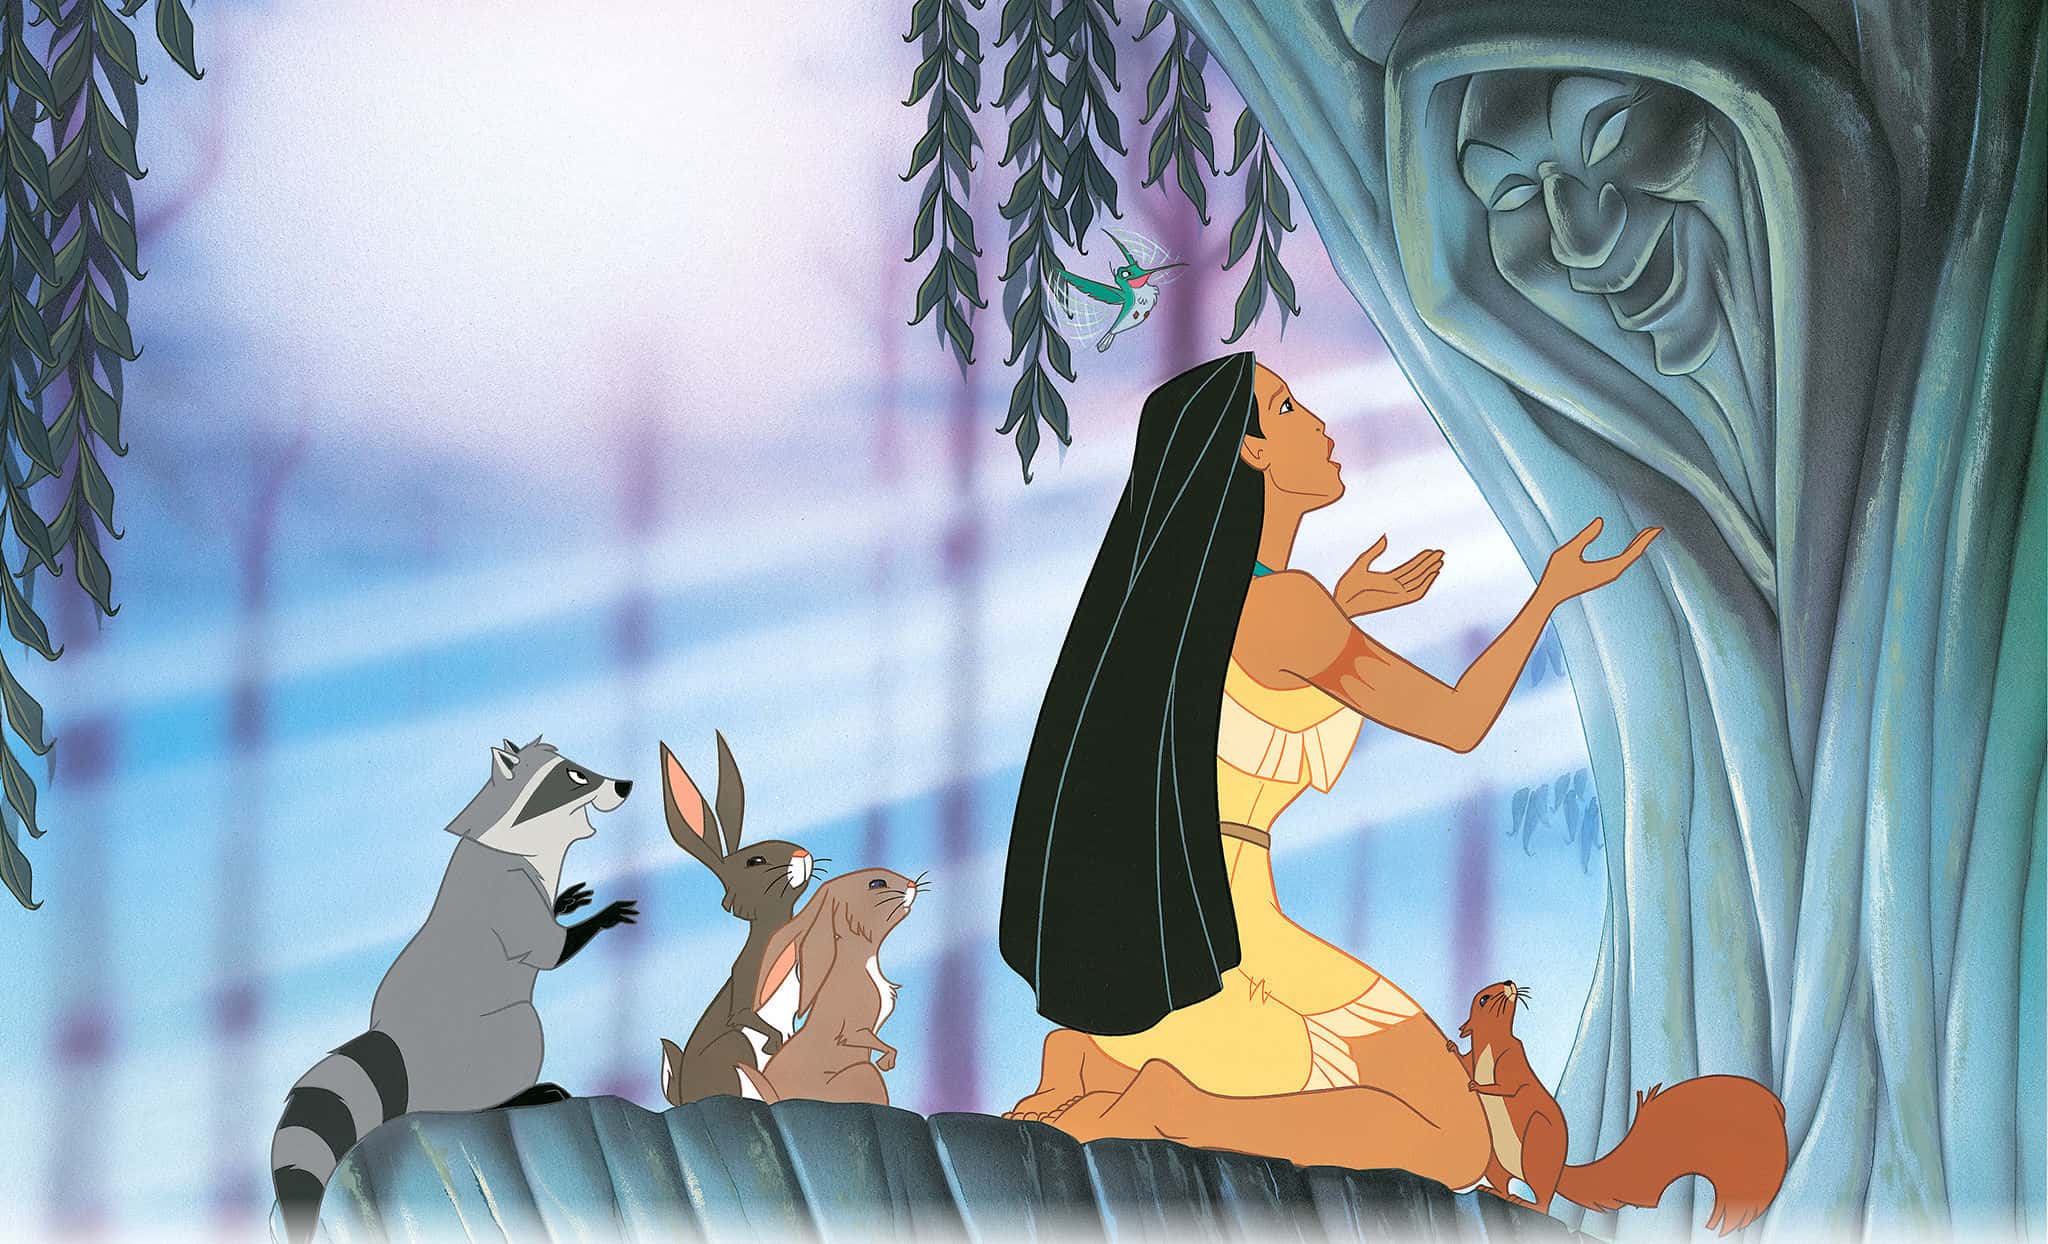 Historical Pocahontas versus the Disney Movie